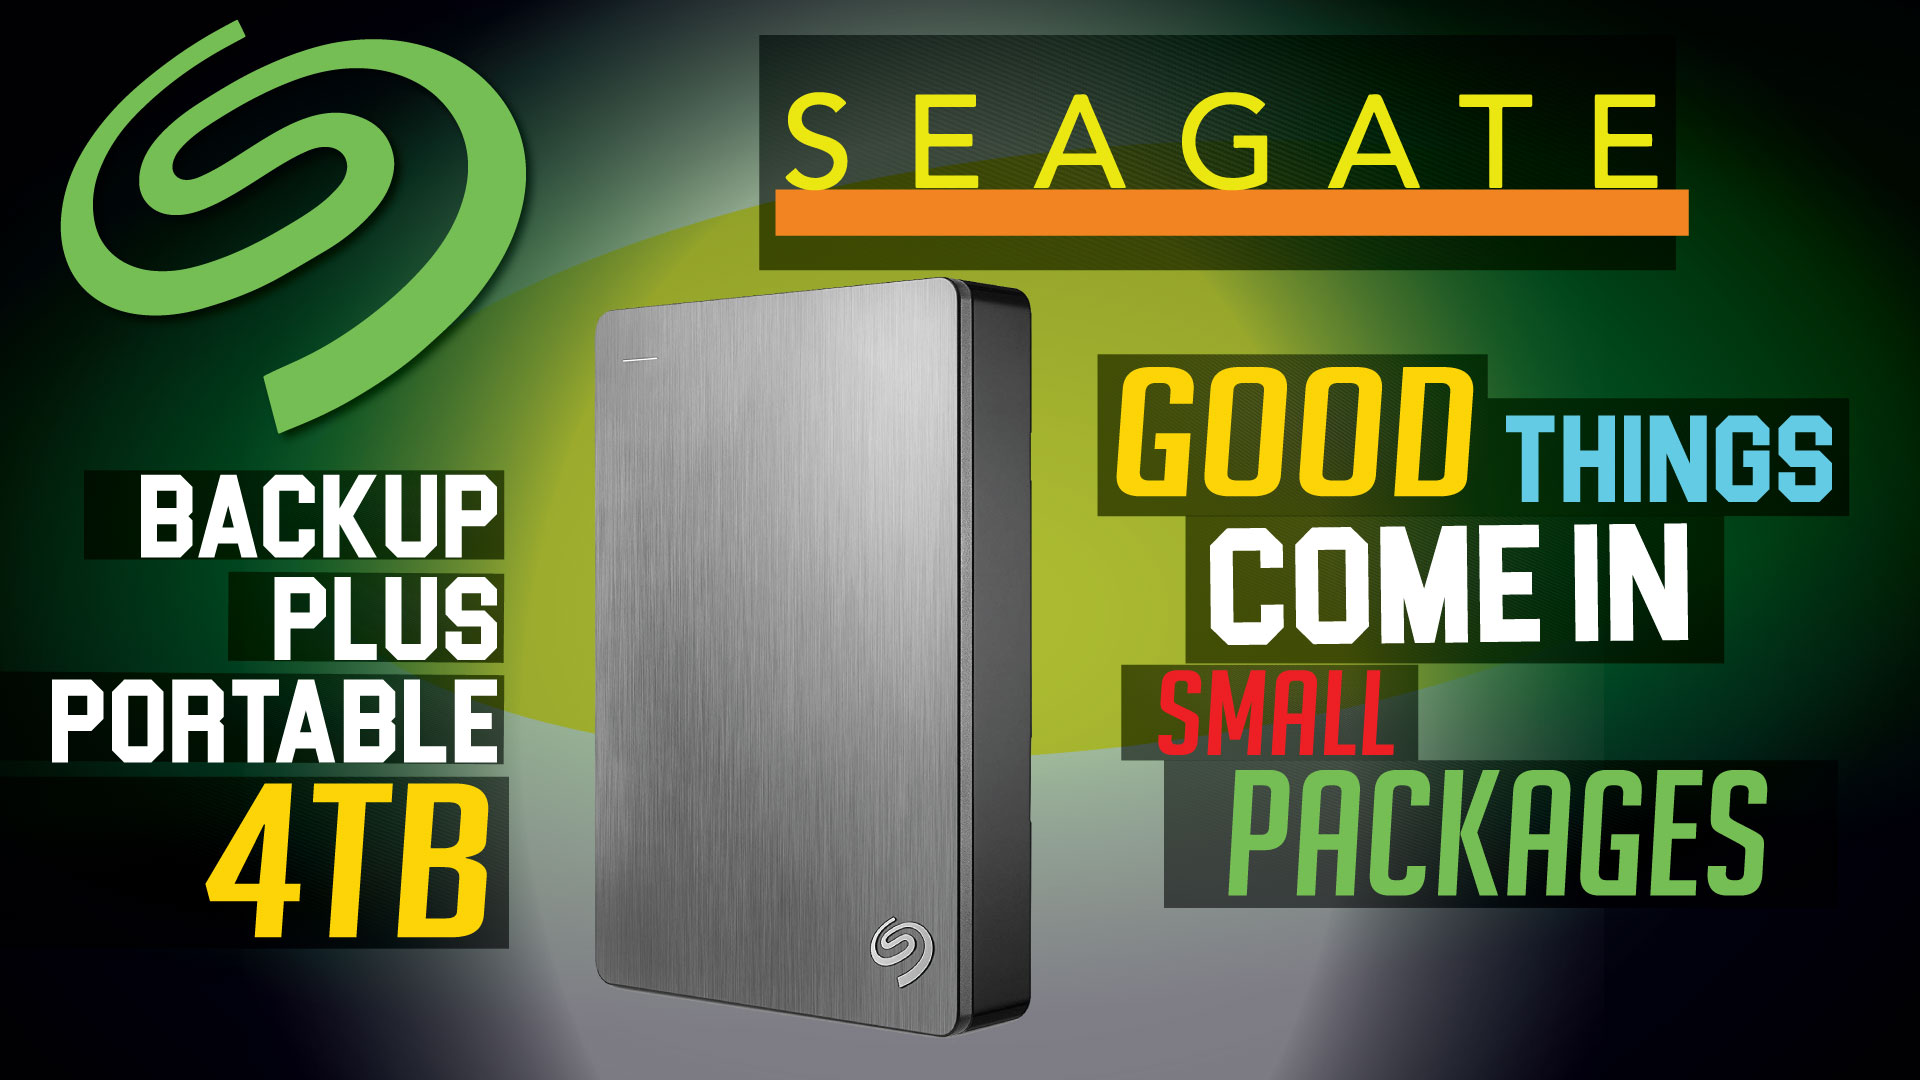 seagate 4tb backup plus portable hard drive spin rate